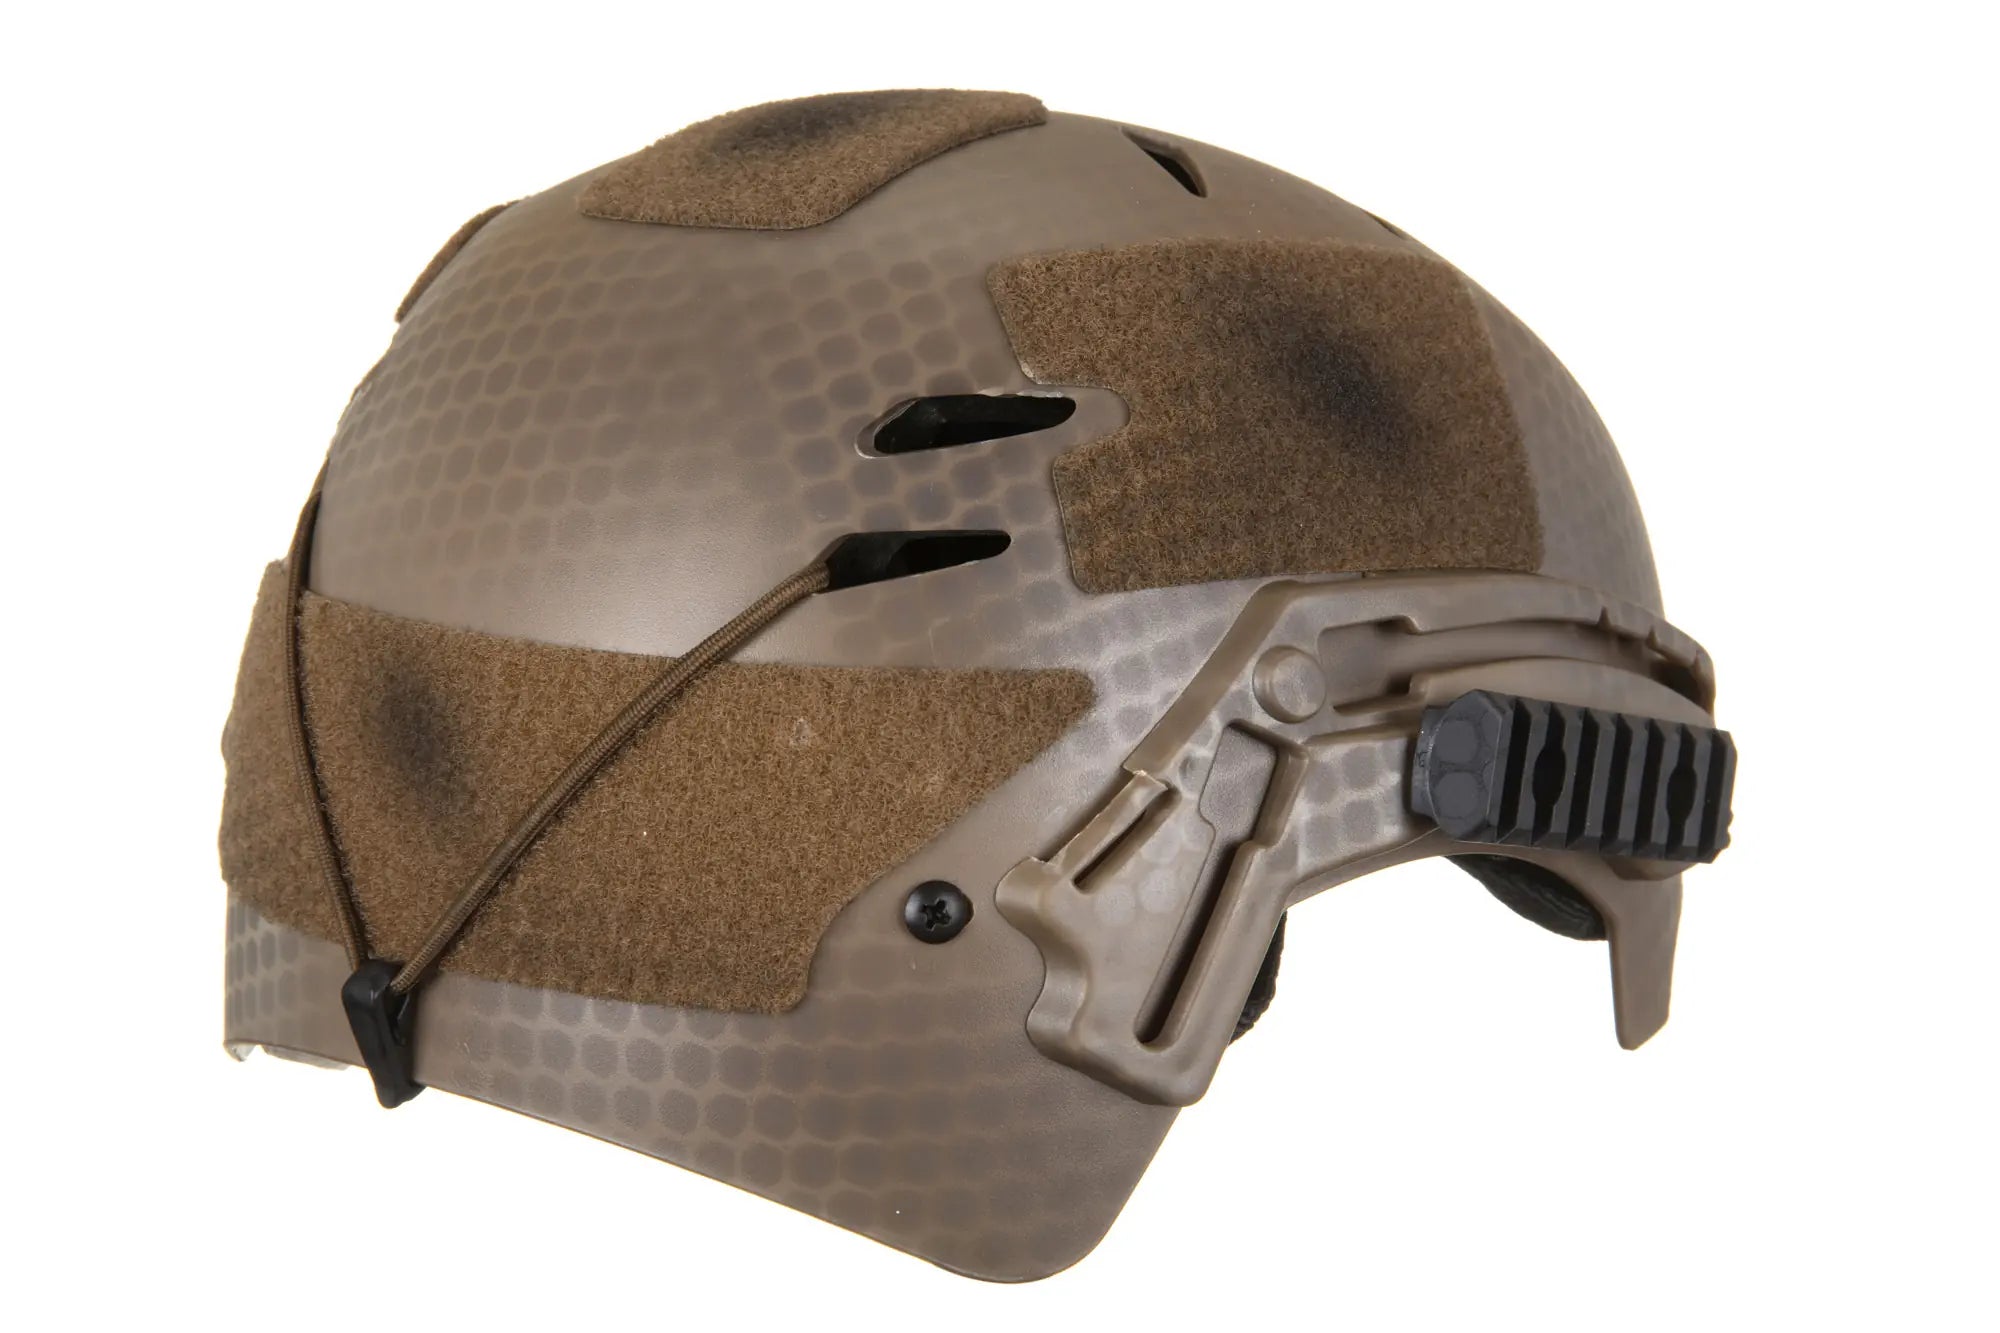 Replica of Emerson Gear EXF Bump style helmet Eco Coyote Brown